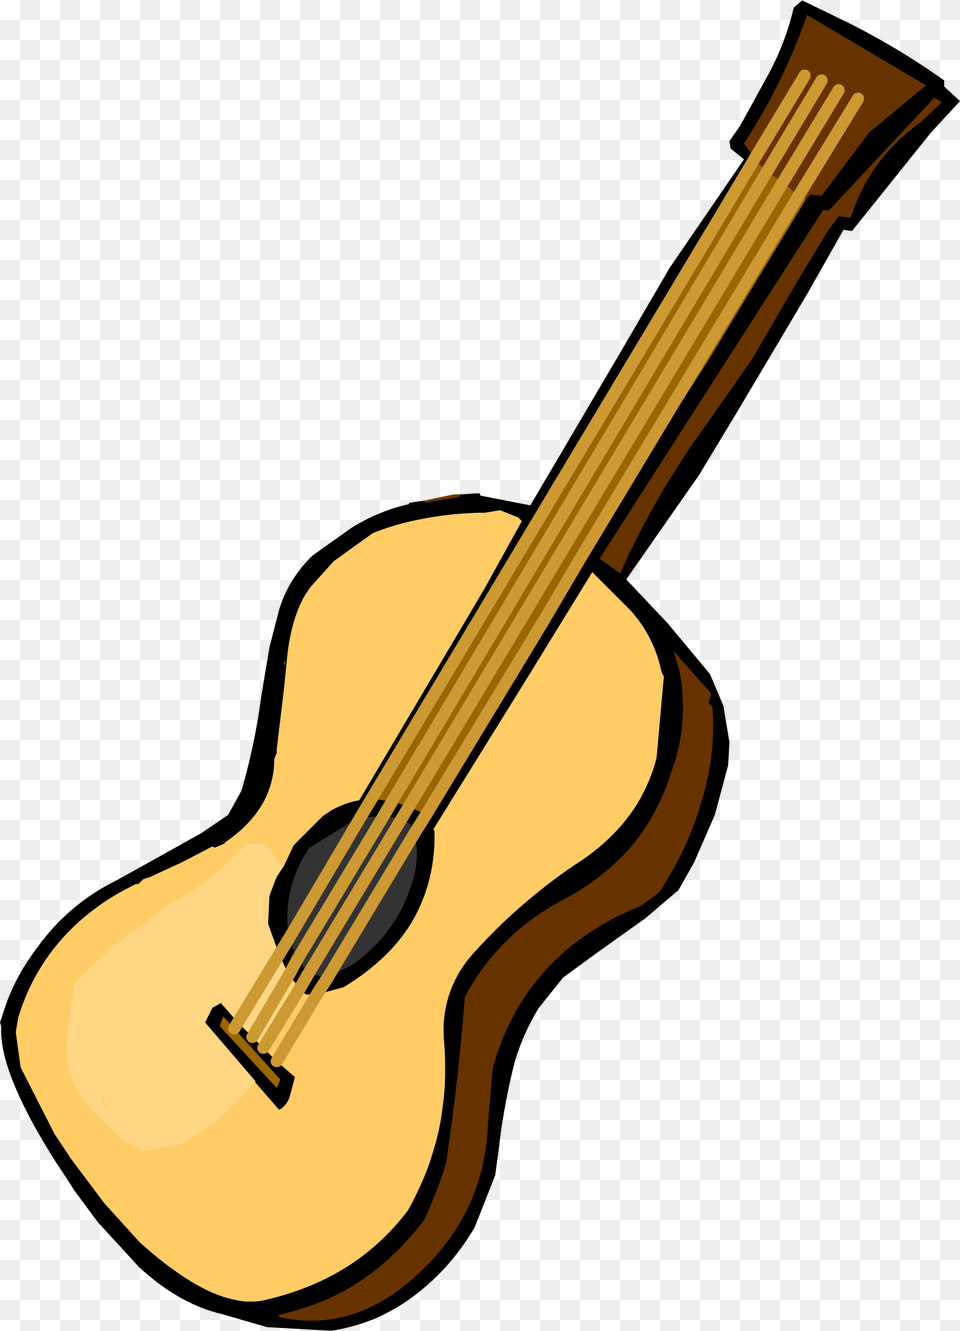 Acousticguitar Club Penguin Acoustic Guitar, Musical Instrument, Bass Guitar Png Image